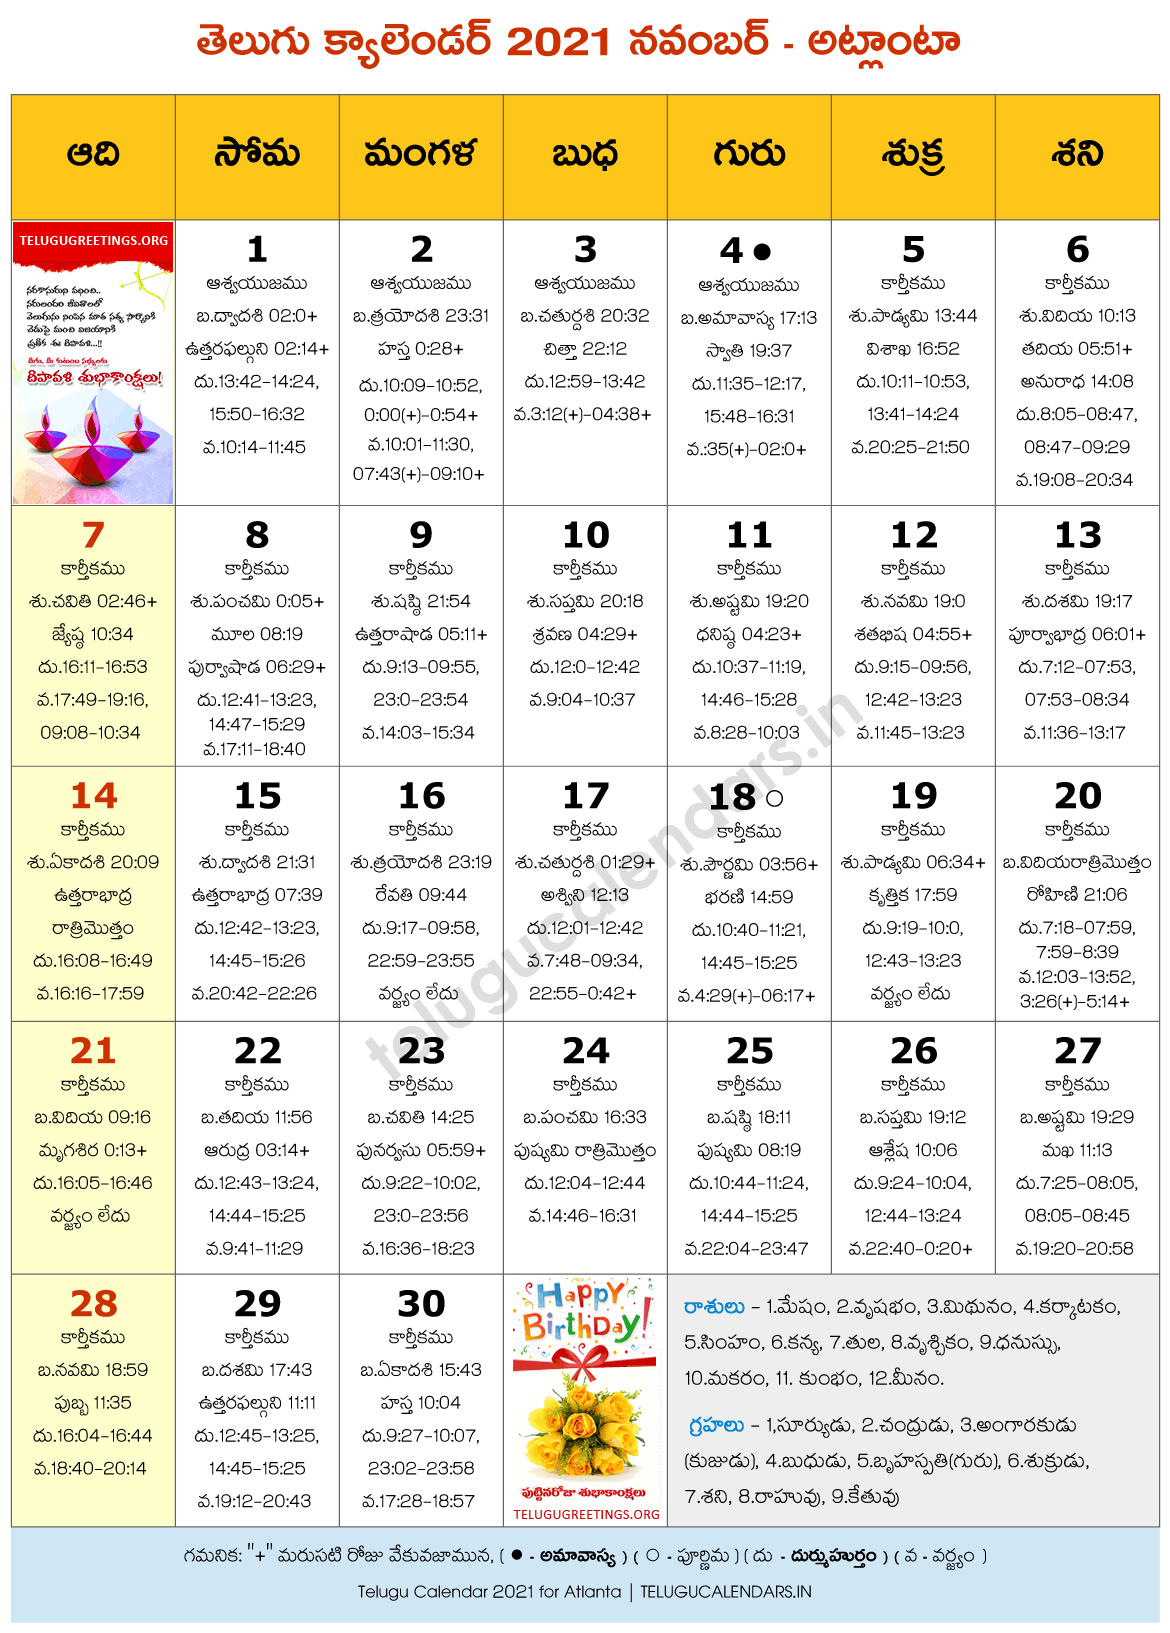 Atlanta 2021 November Telugu Calendar - 2022 Telugu Calendar PDF